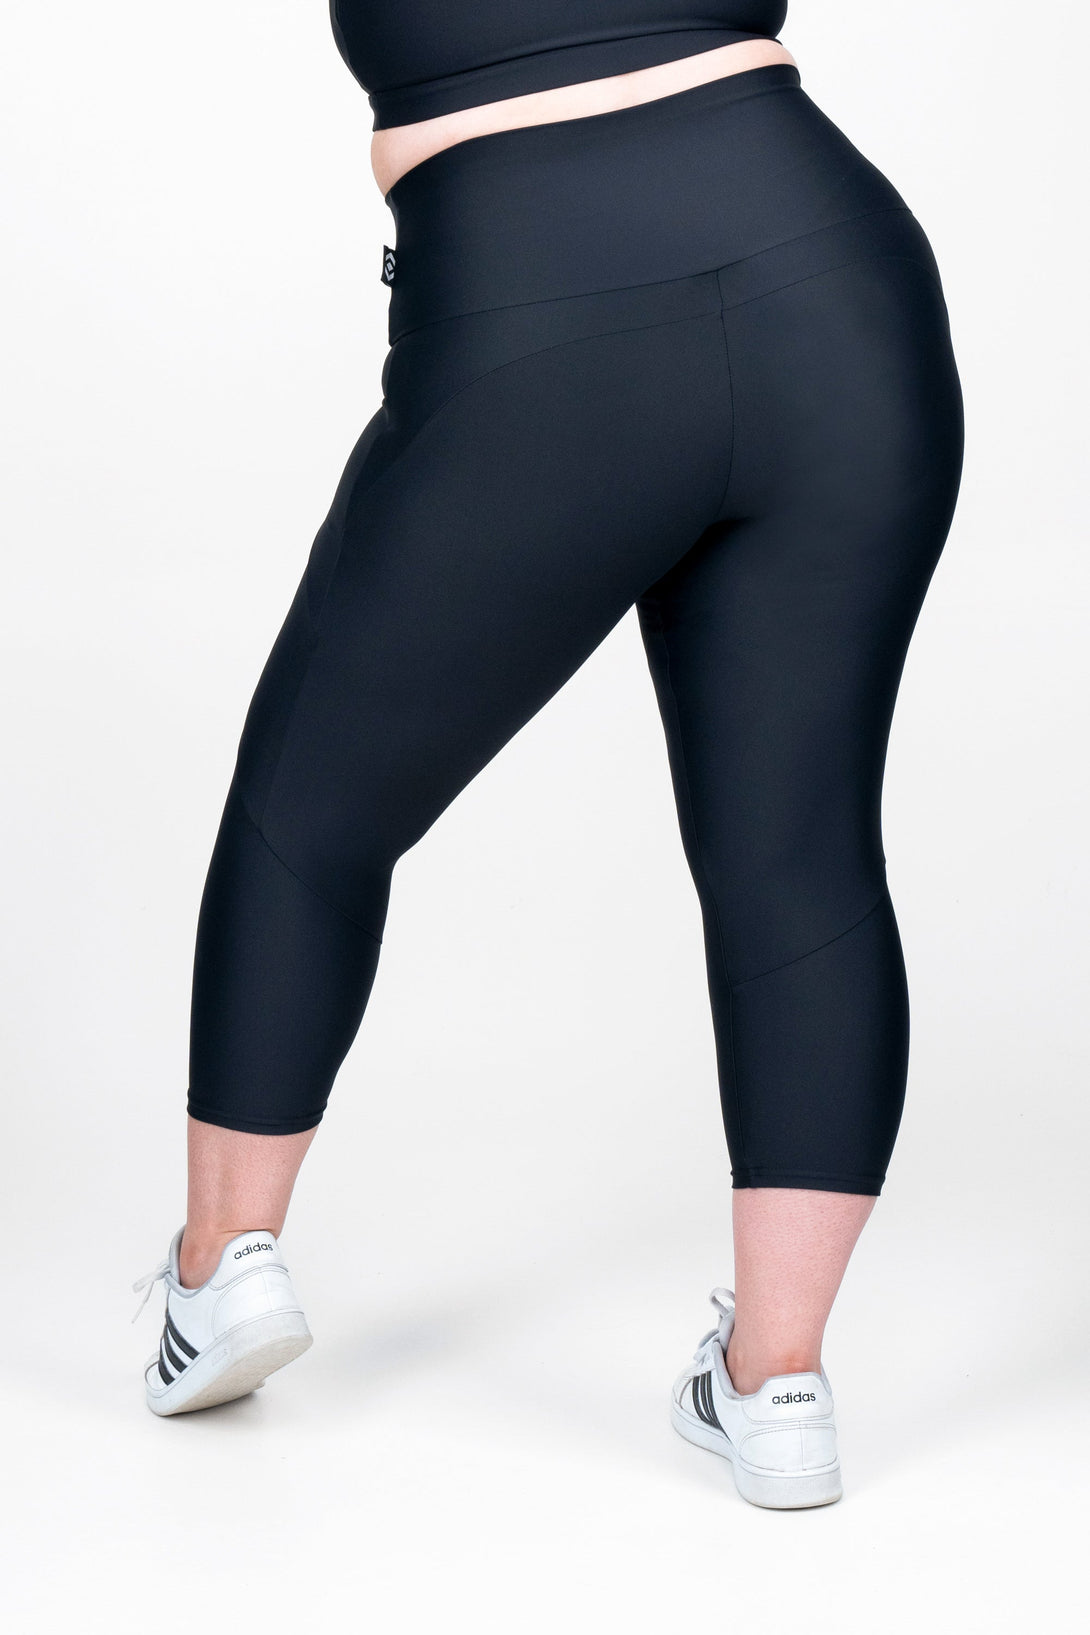 Black Performance - Pocket Booty Shaper High Waisted Capri Leggings-Activewear-Exoticathletica